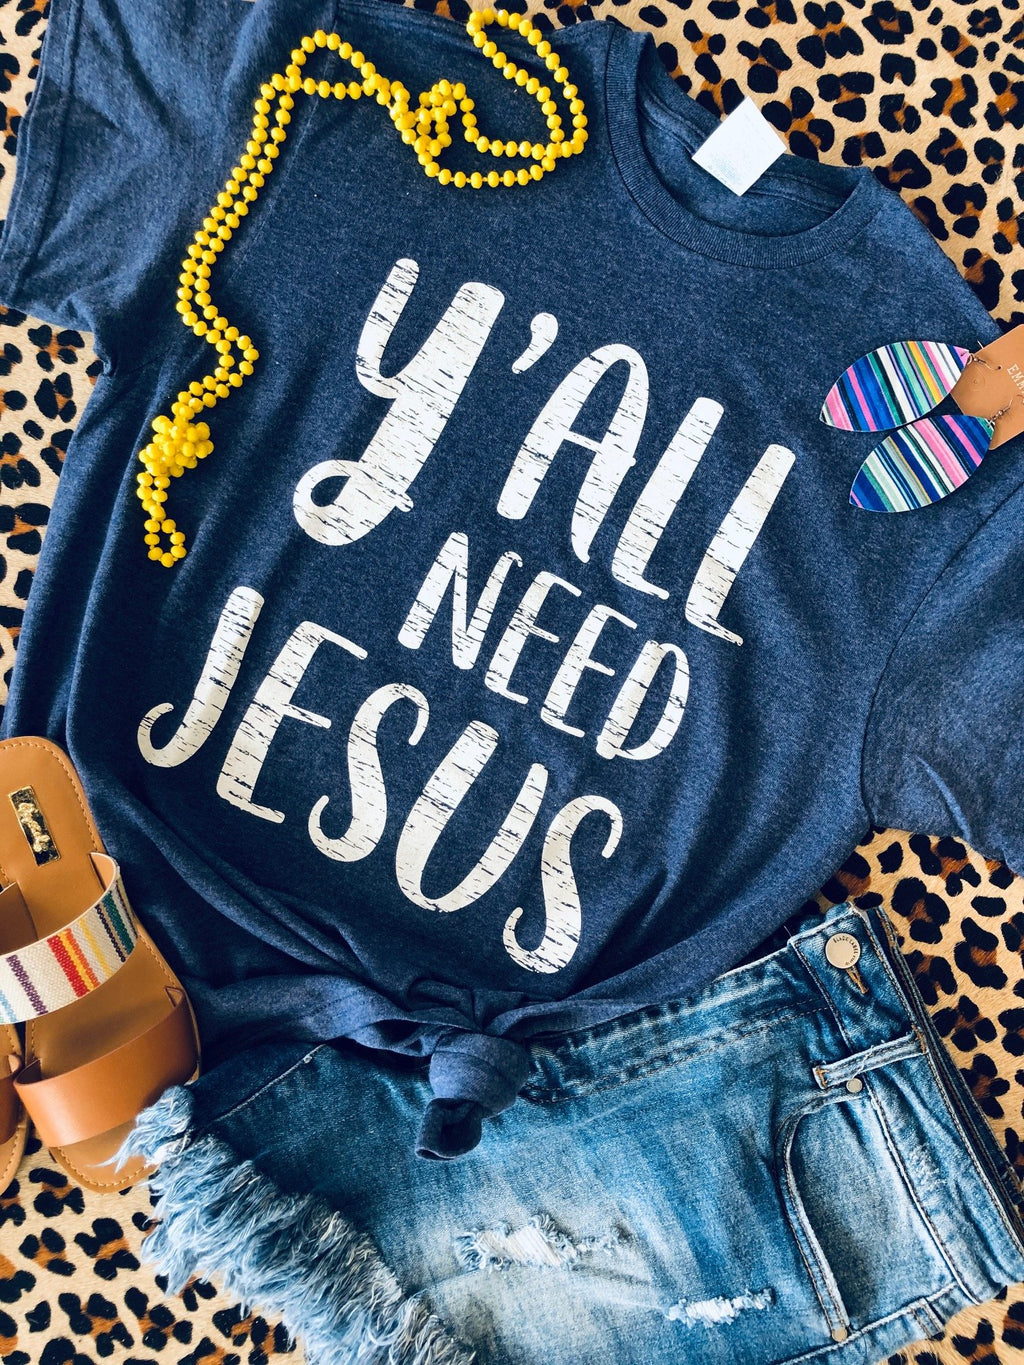 Yall Need Jesus!